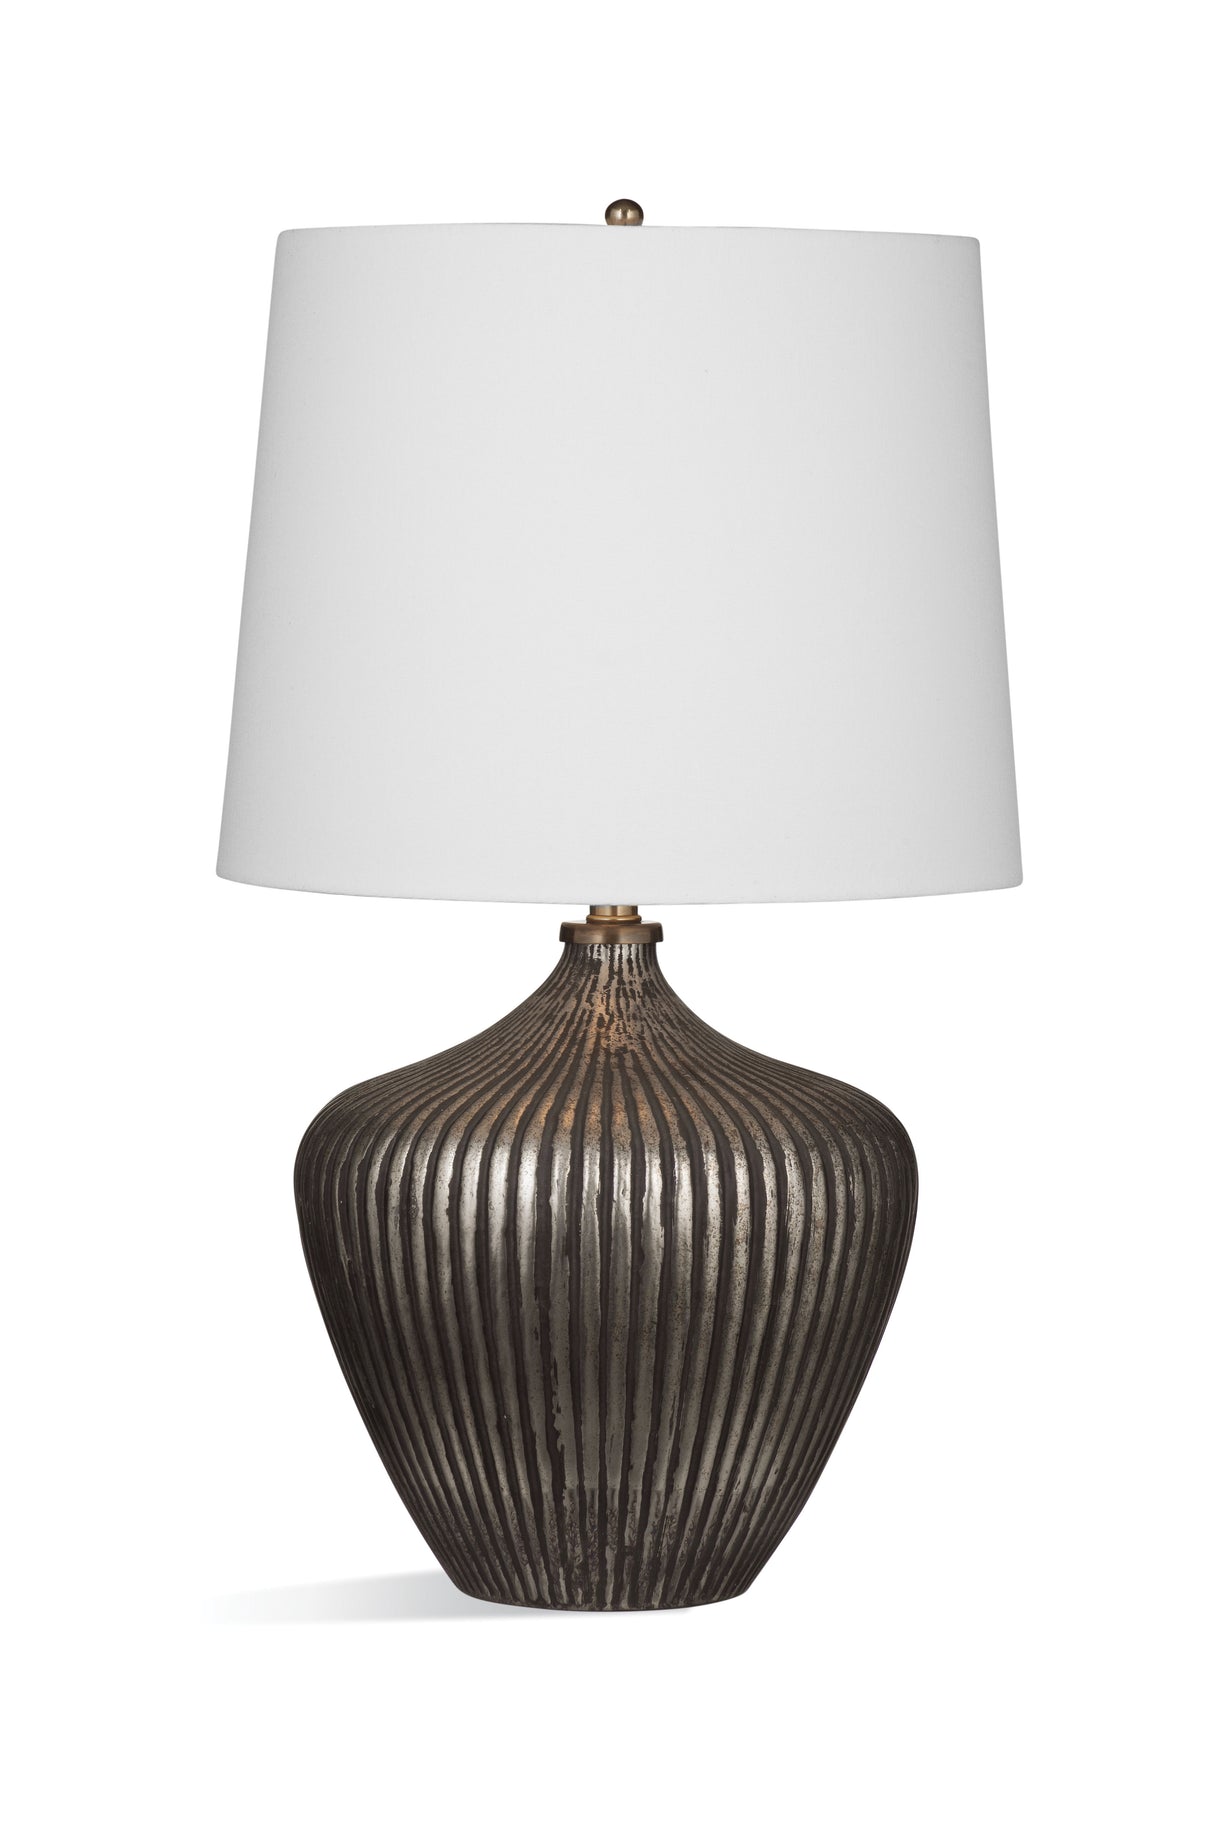 Sanbro - Table Lamp - Dark Gray